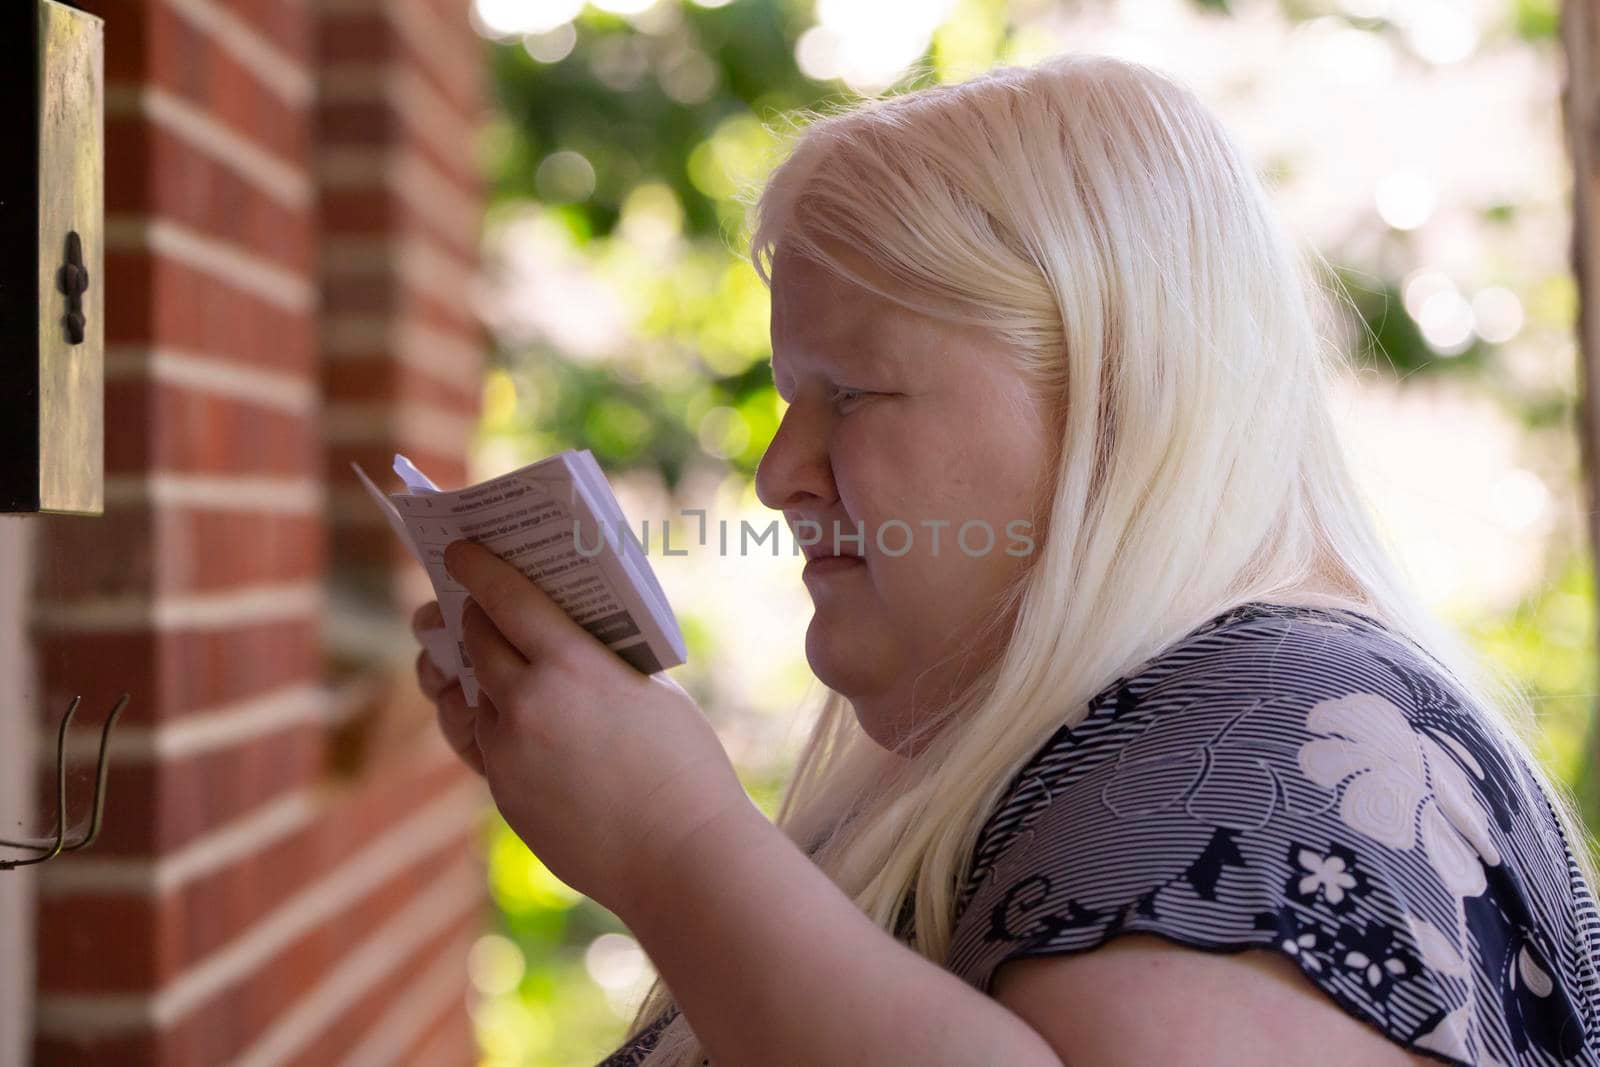 Albino Woman Reading Mail by tornado98